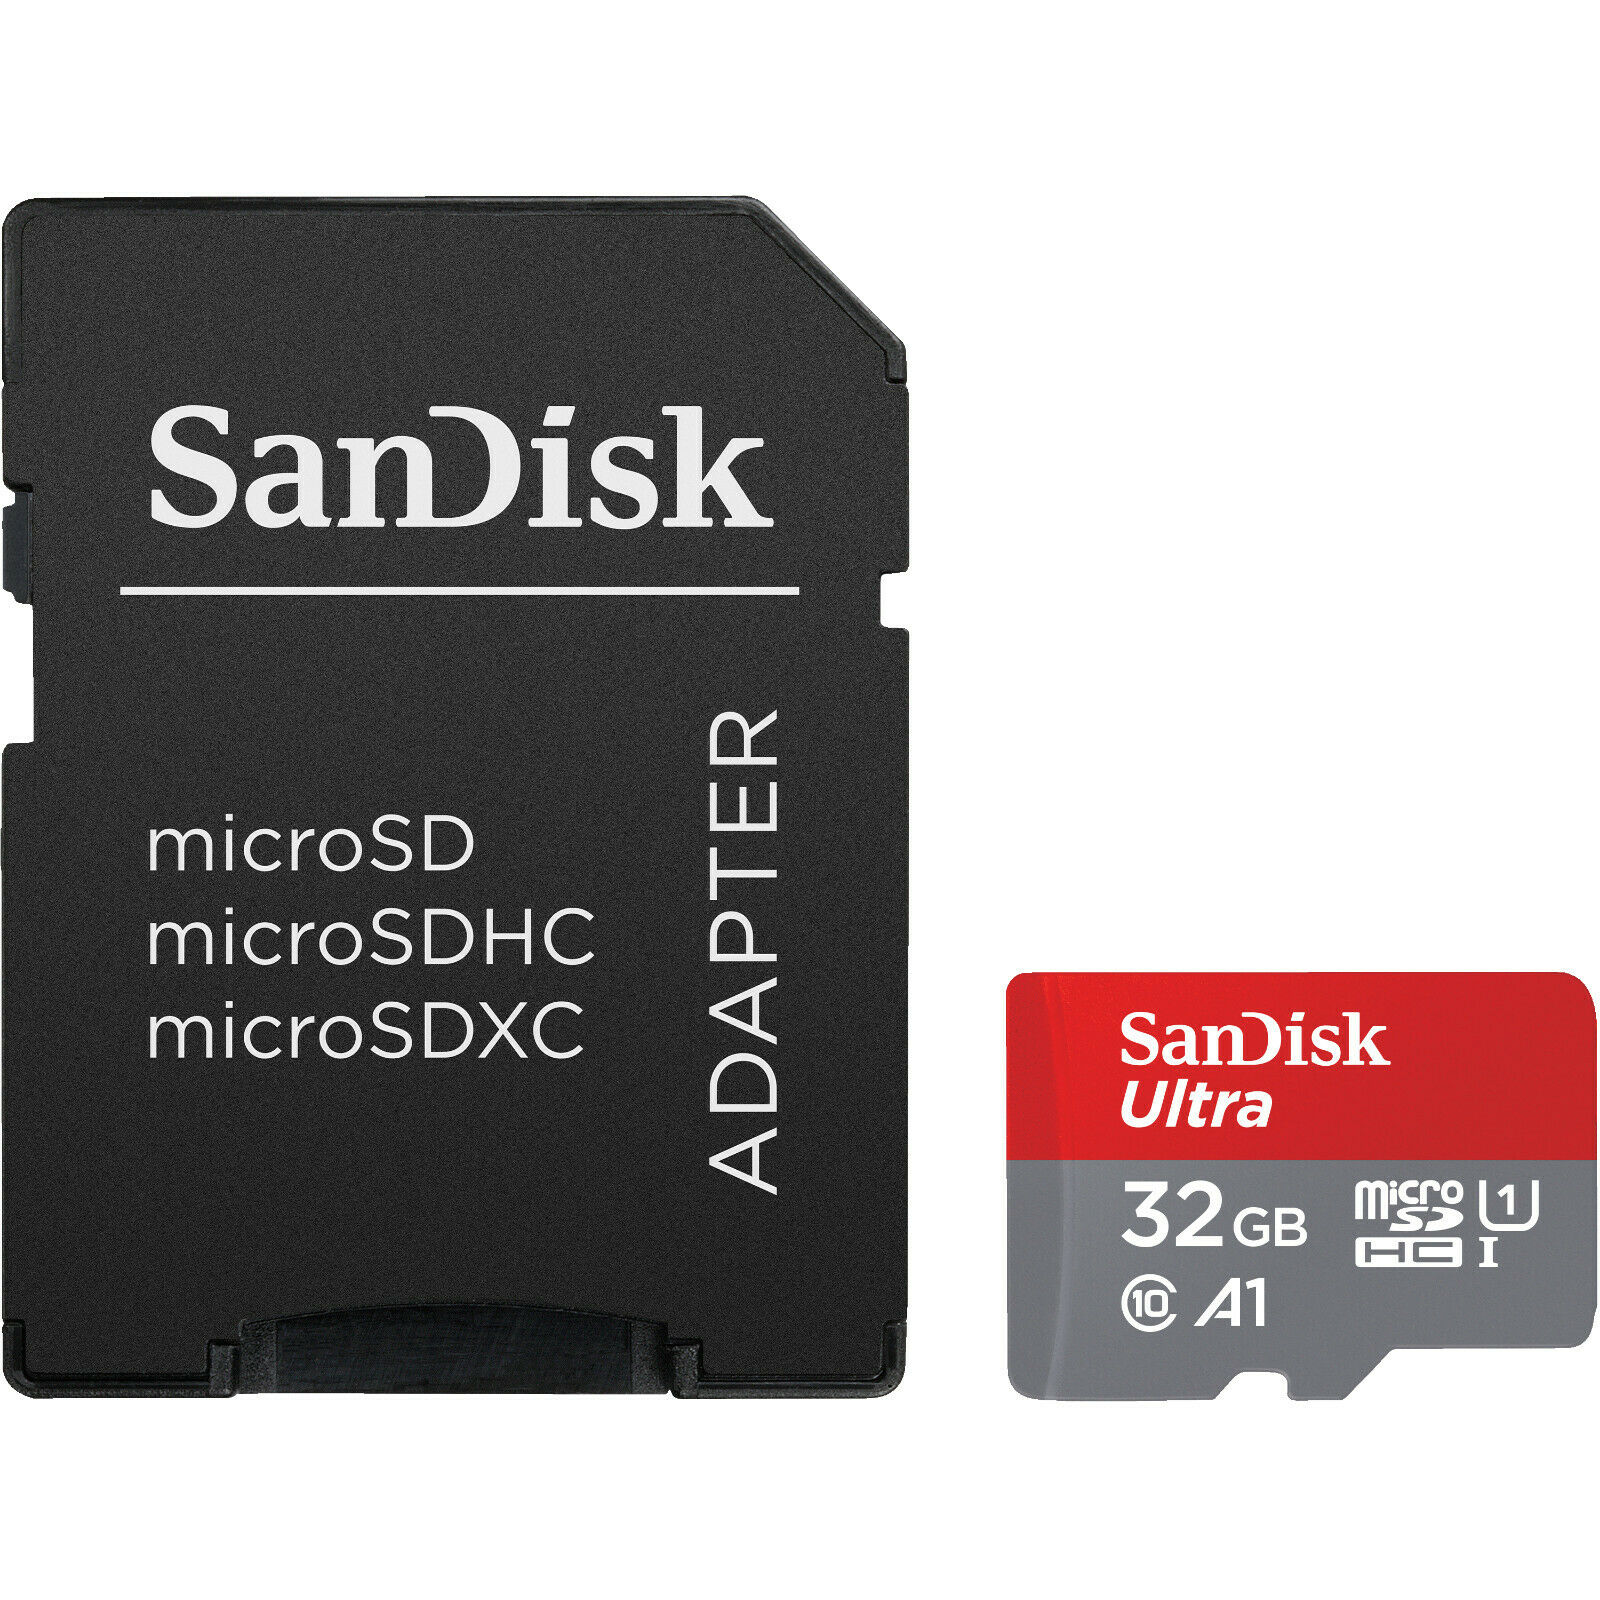 Bild zu 32 GB MicroSDXC Speicherkarte Sandisk Ultra A1 für 7€ (Vergleich: 10,99€)